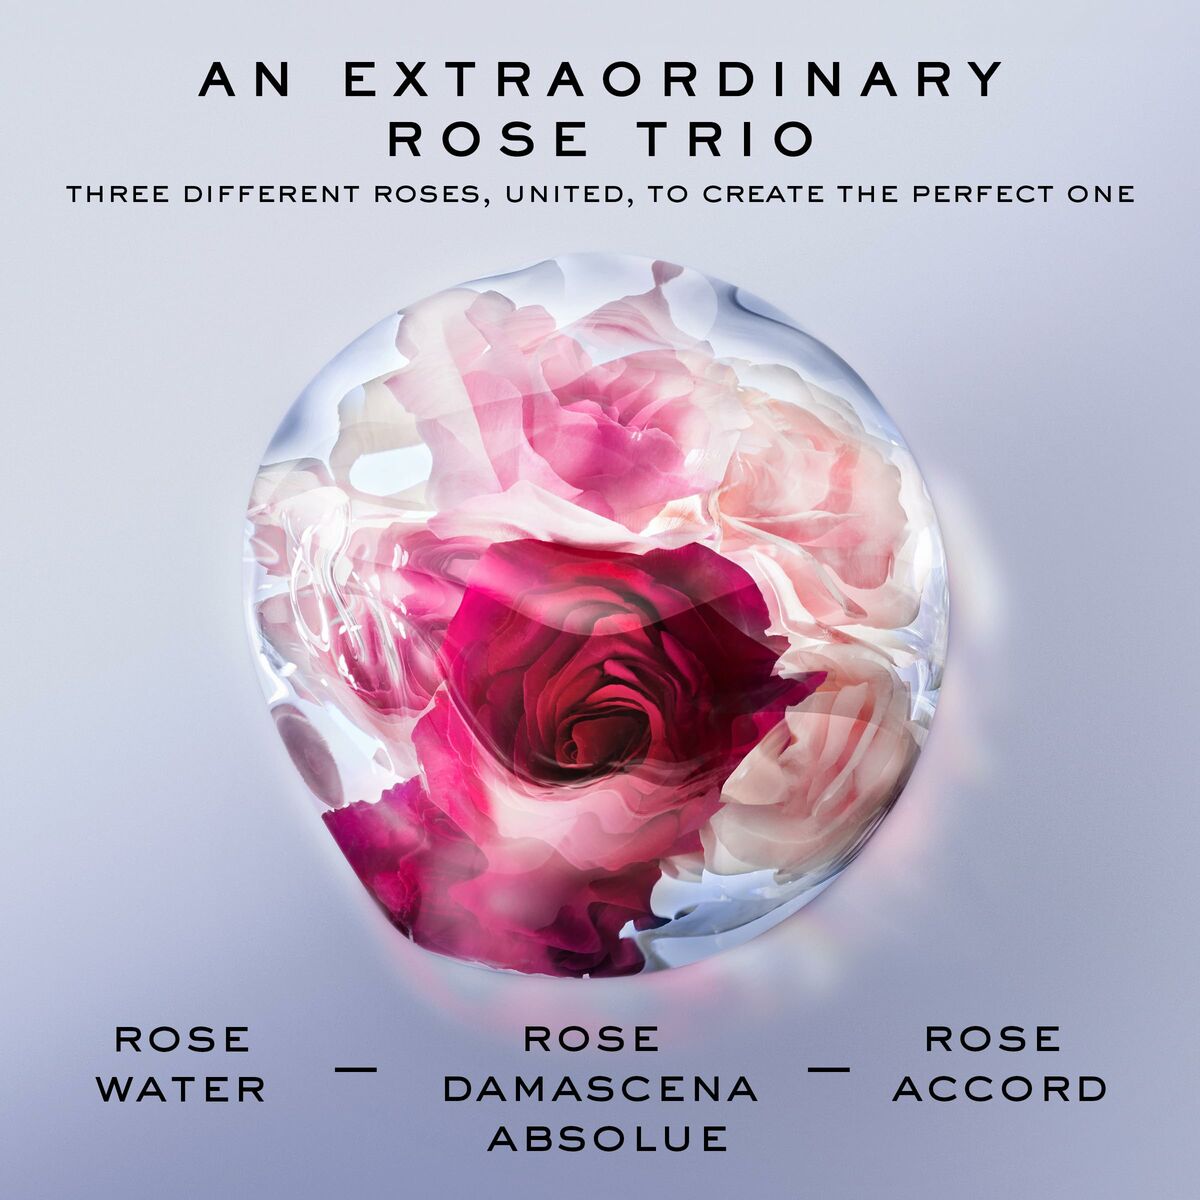 Kvinners parfyme Lancôme la vie est belle rose ekstraordinær edp 50 ml